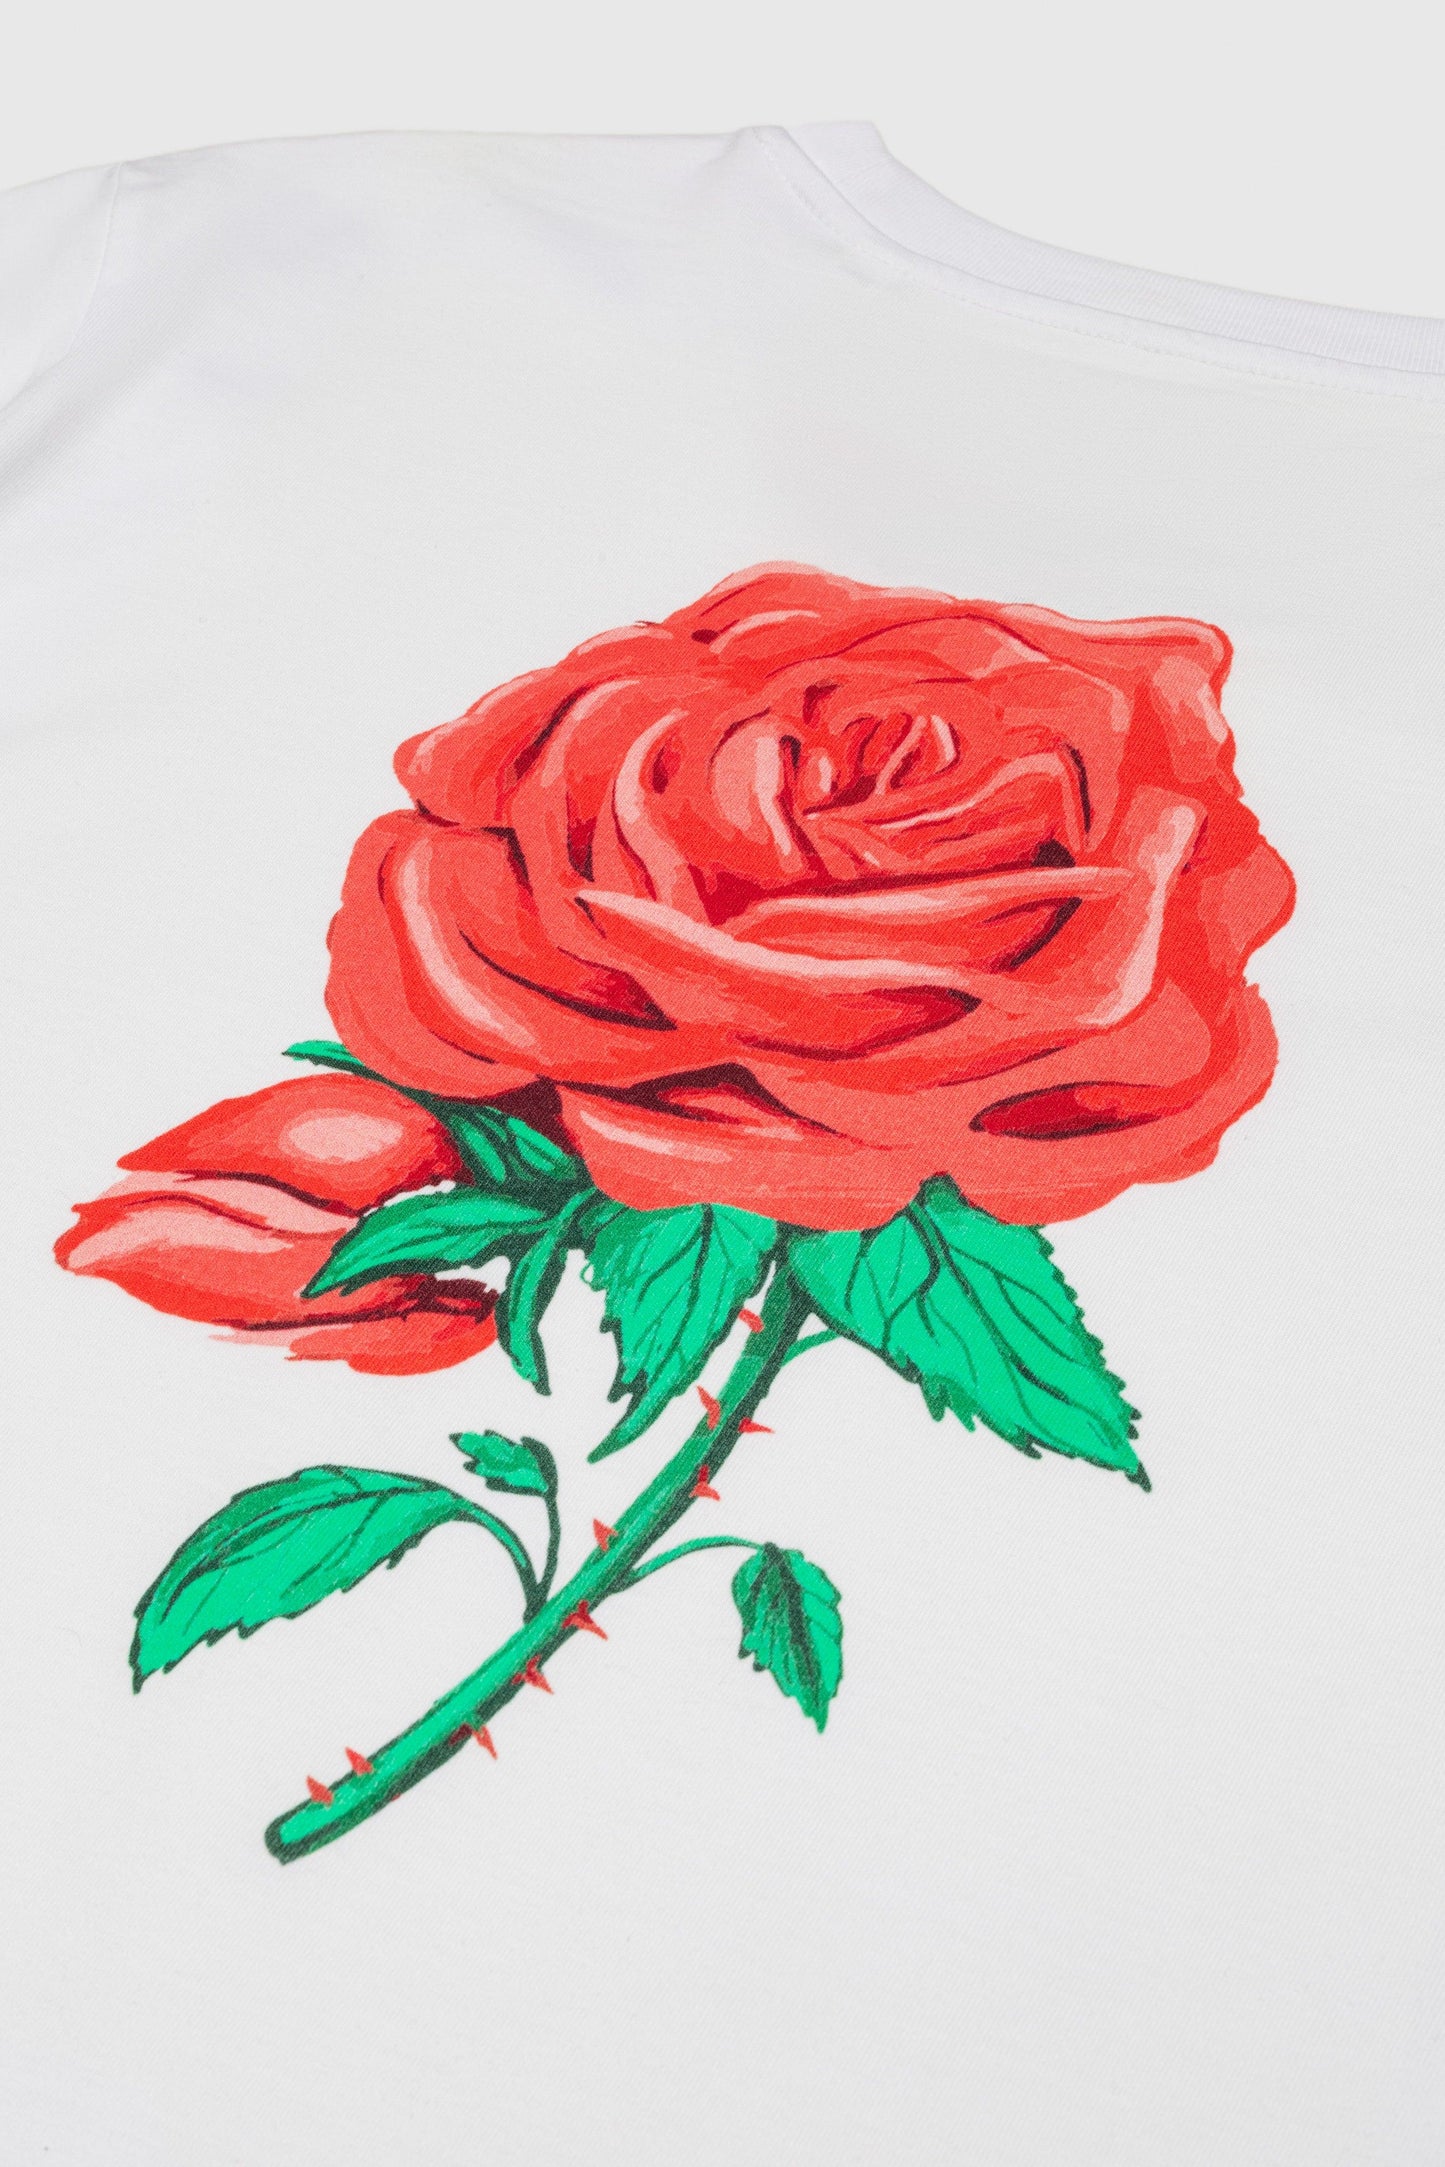 Flower T-Shirt Dress | Dresses | pitod.com